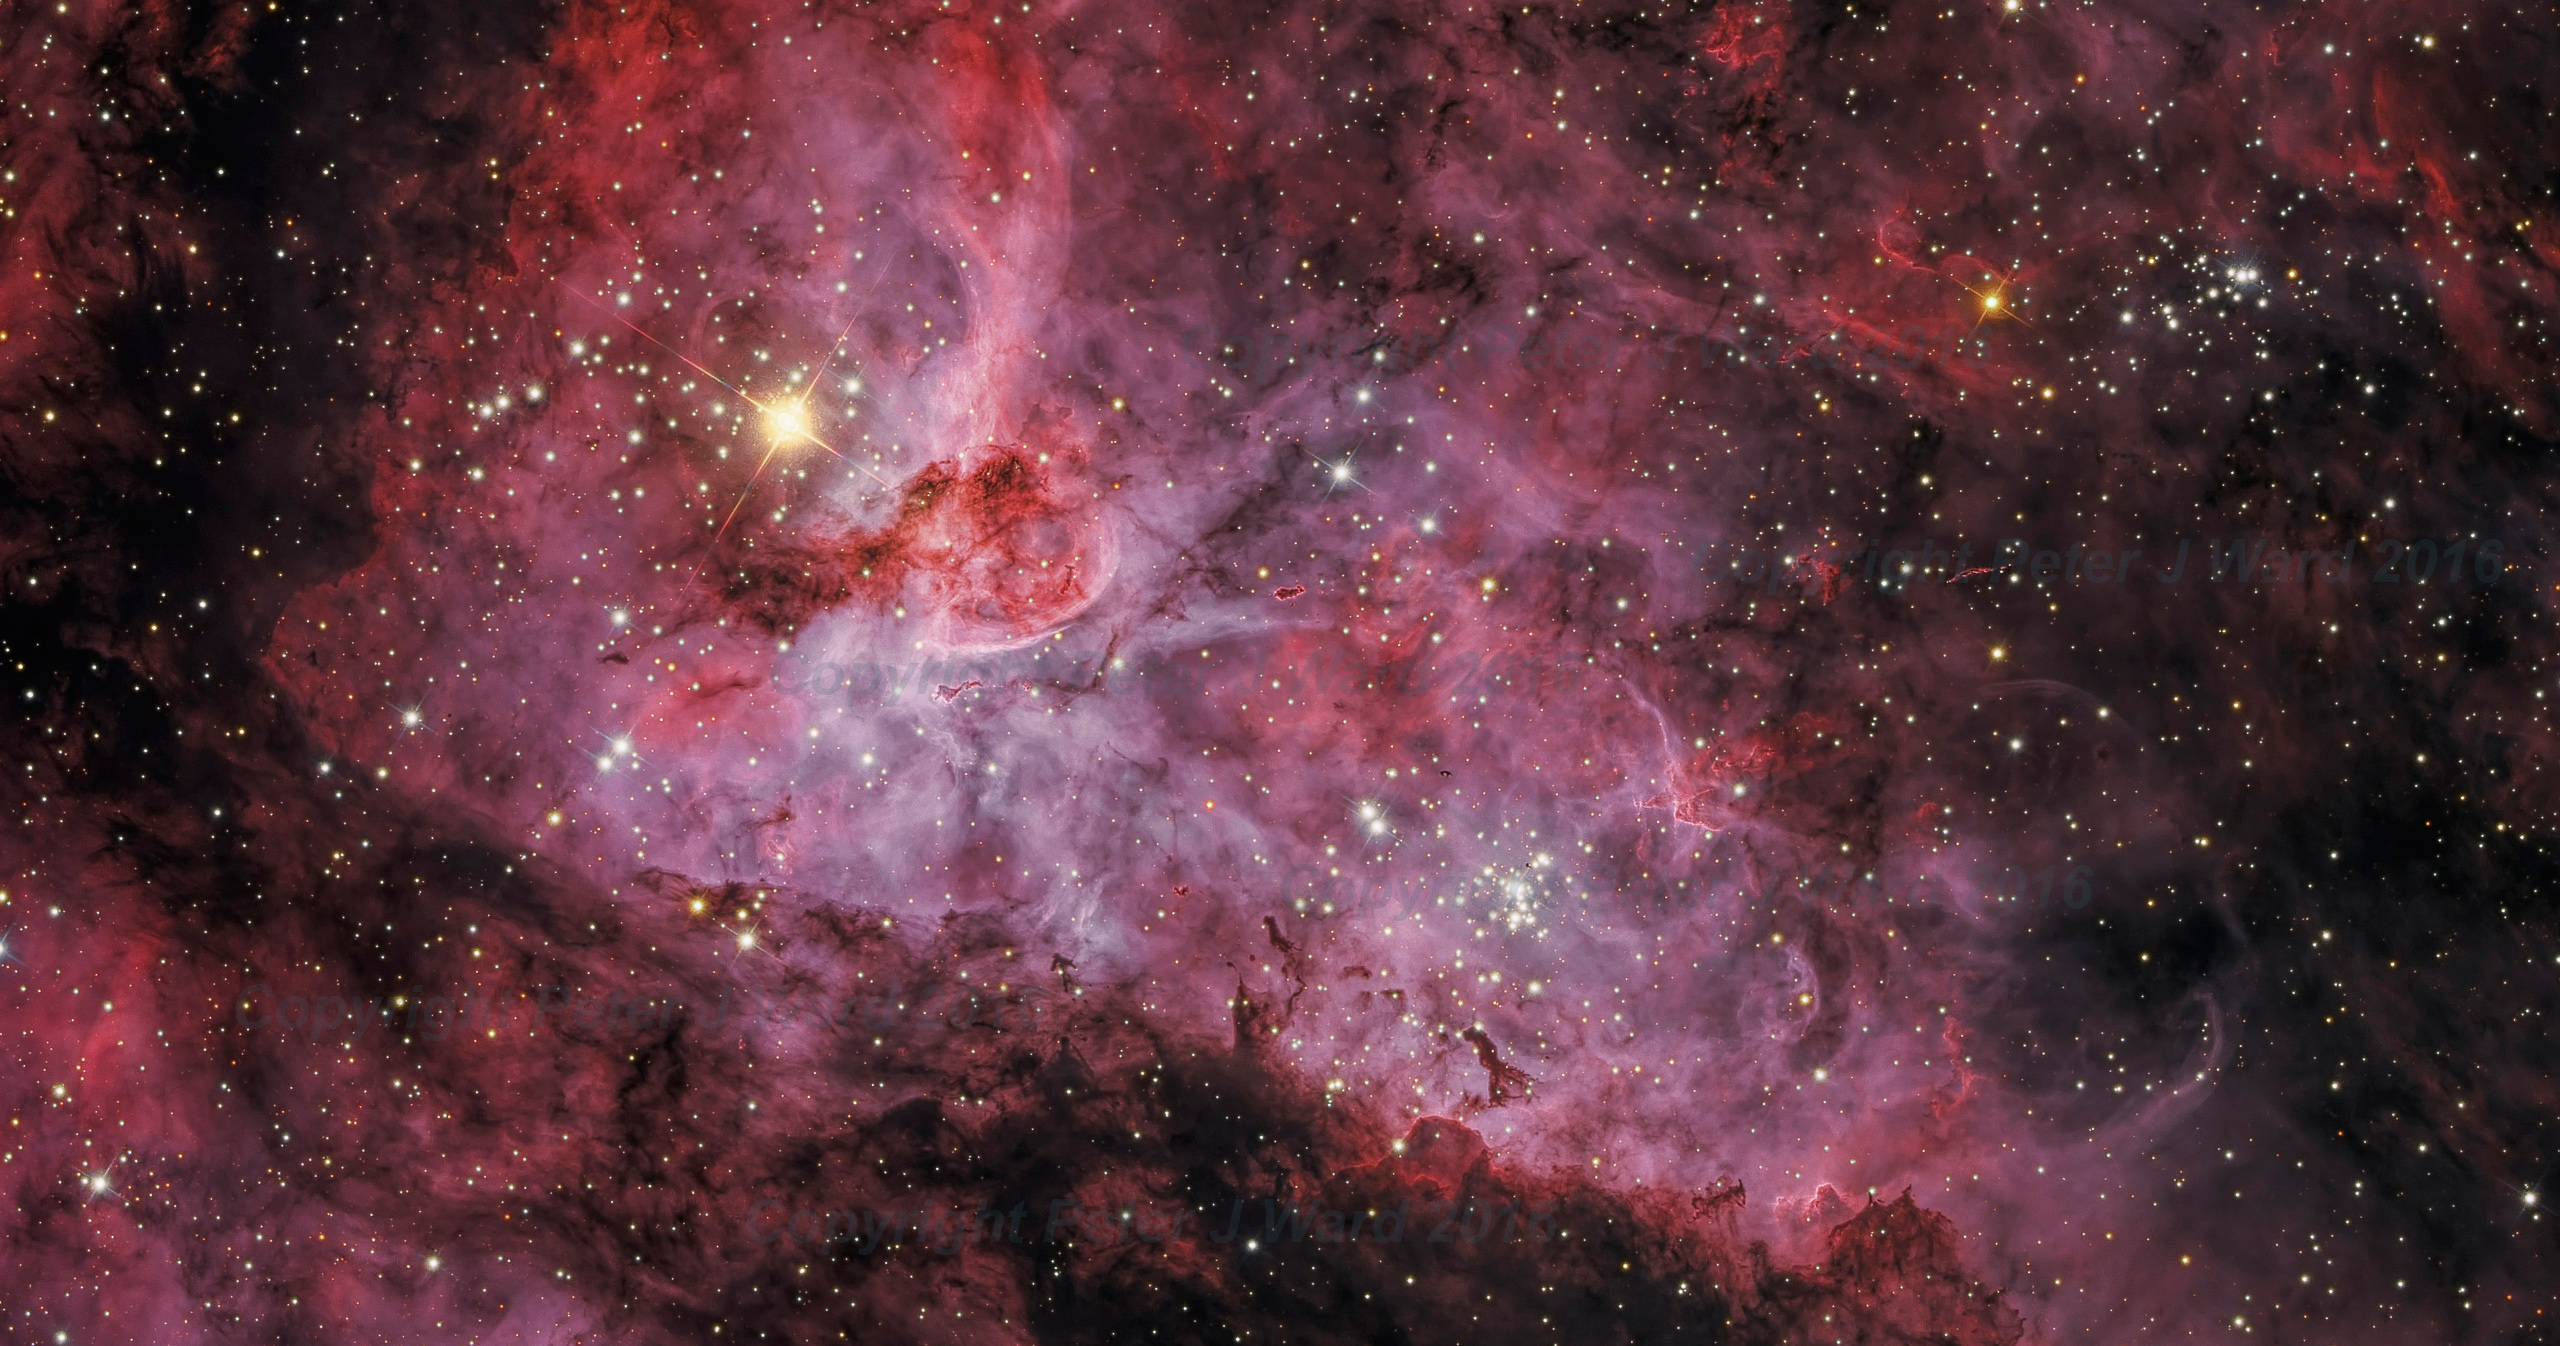 APOD: 2016 May 27 - The Great Carina Nebula